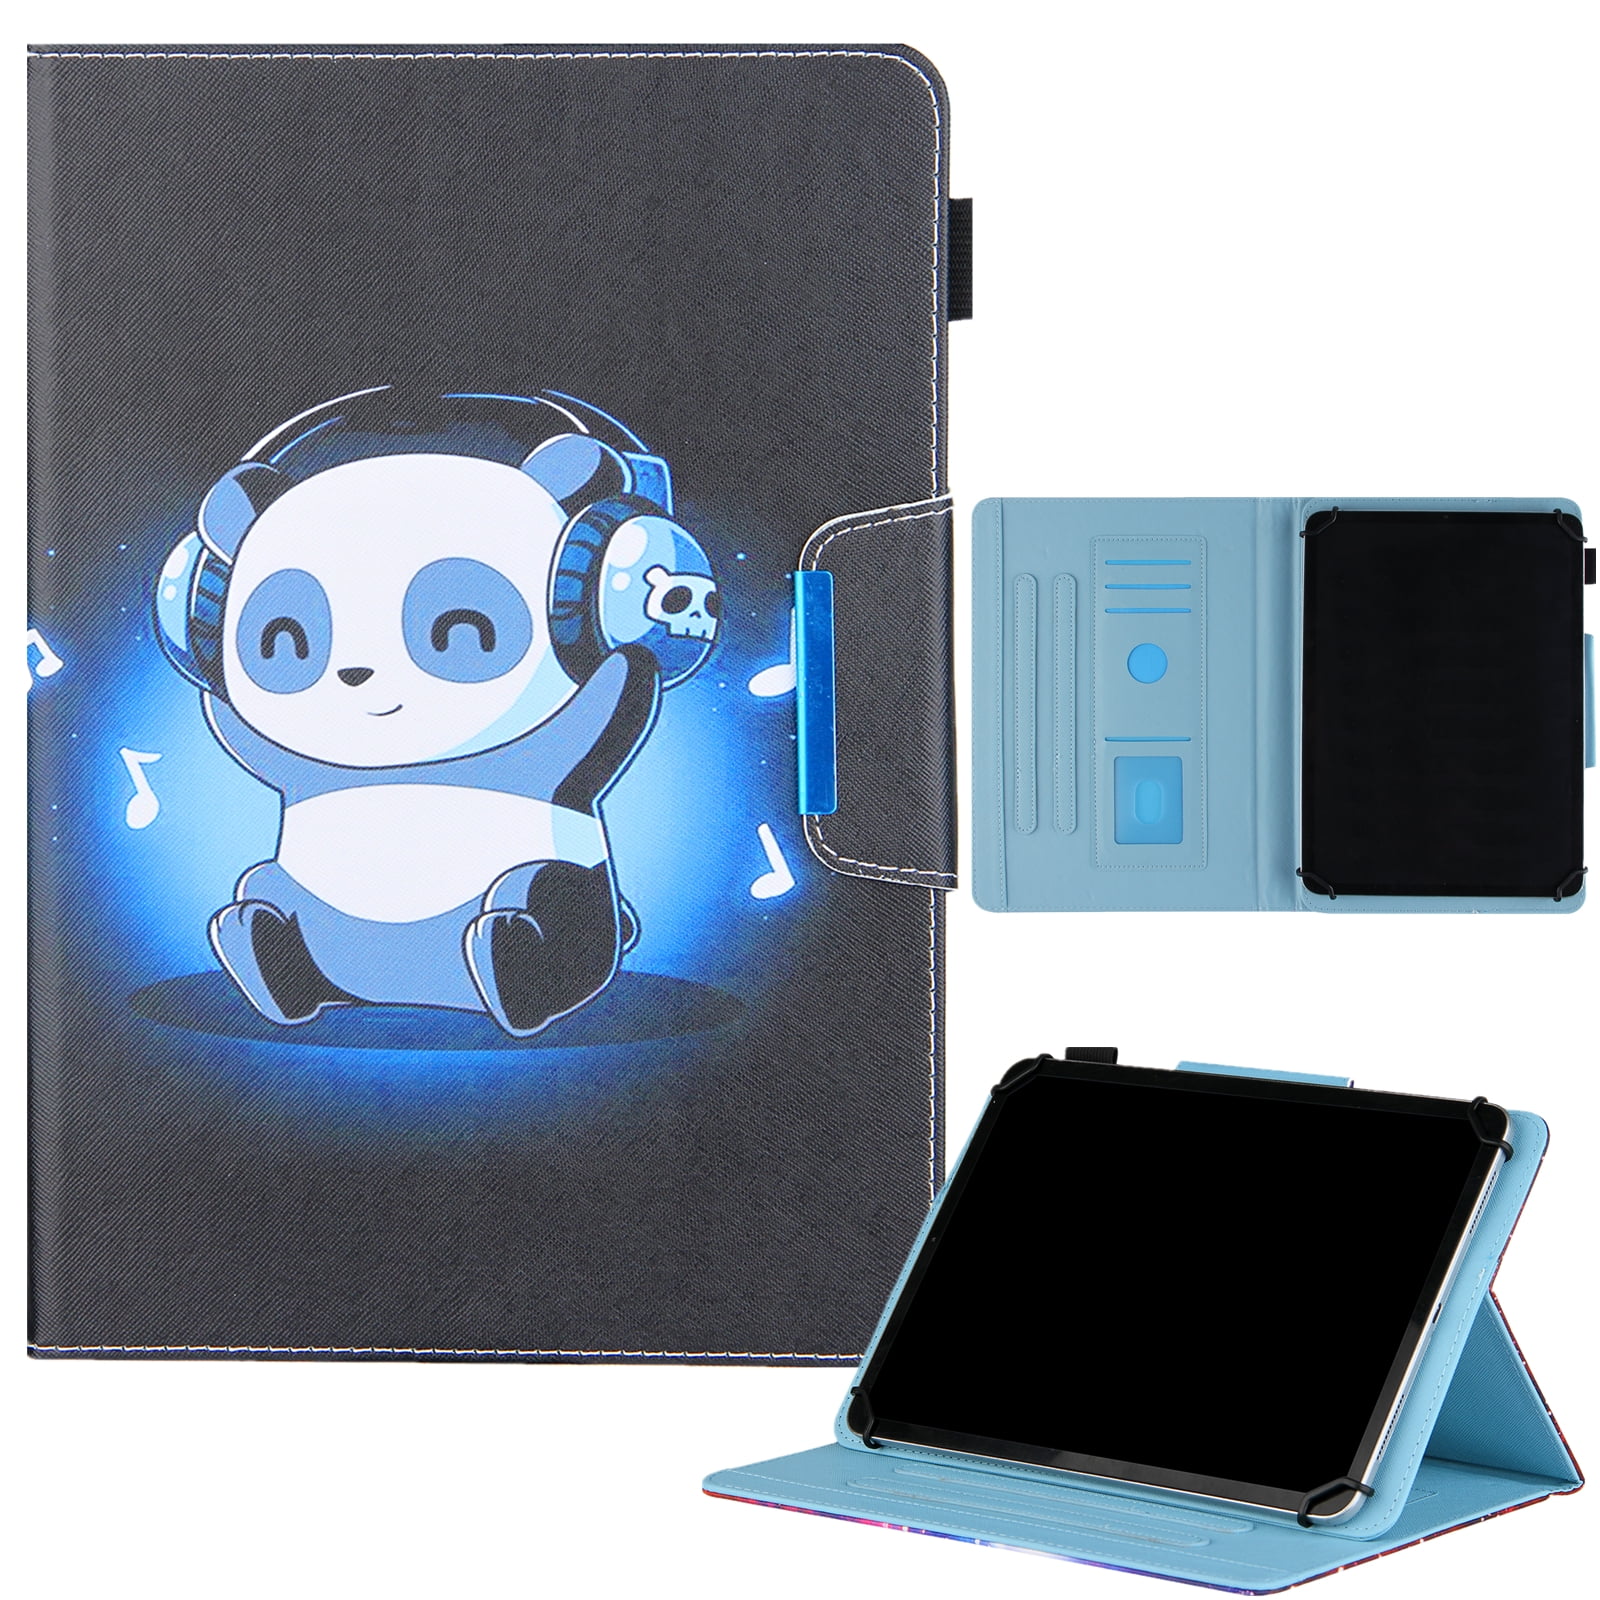 Monstek Smart Flip Slim Case Stand Wallet Protective Cover Auto Wake New iPad 9.7 Inch 2017 iPad Air Case Sleep for iPad 9.7 Inch 2017,iPad Air 1 2-02 Trion of the Sea iPad Air 2